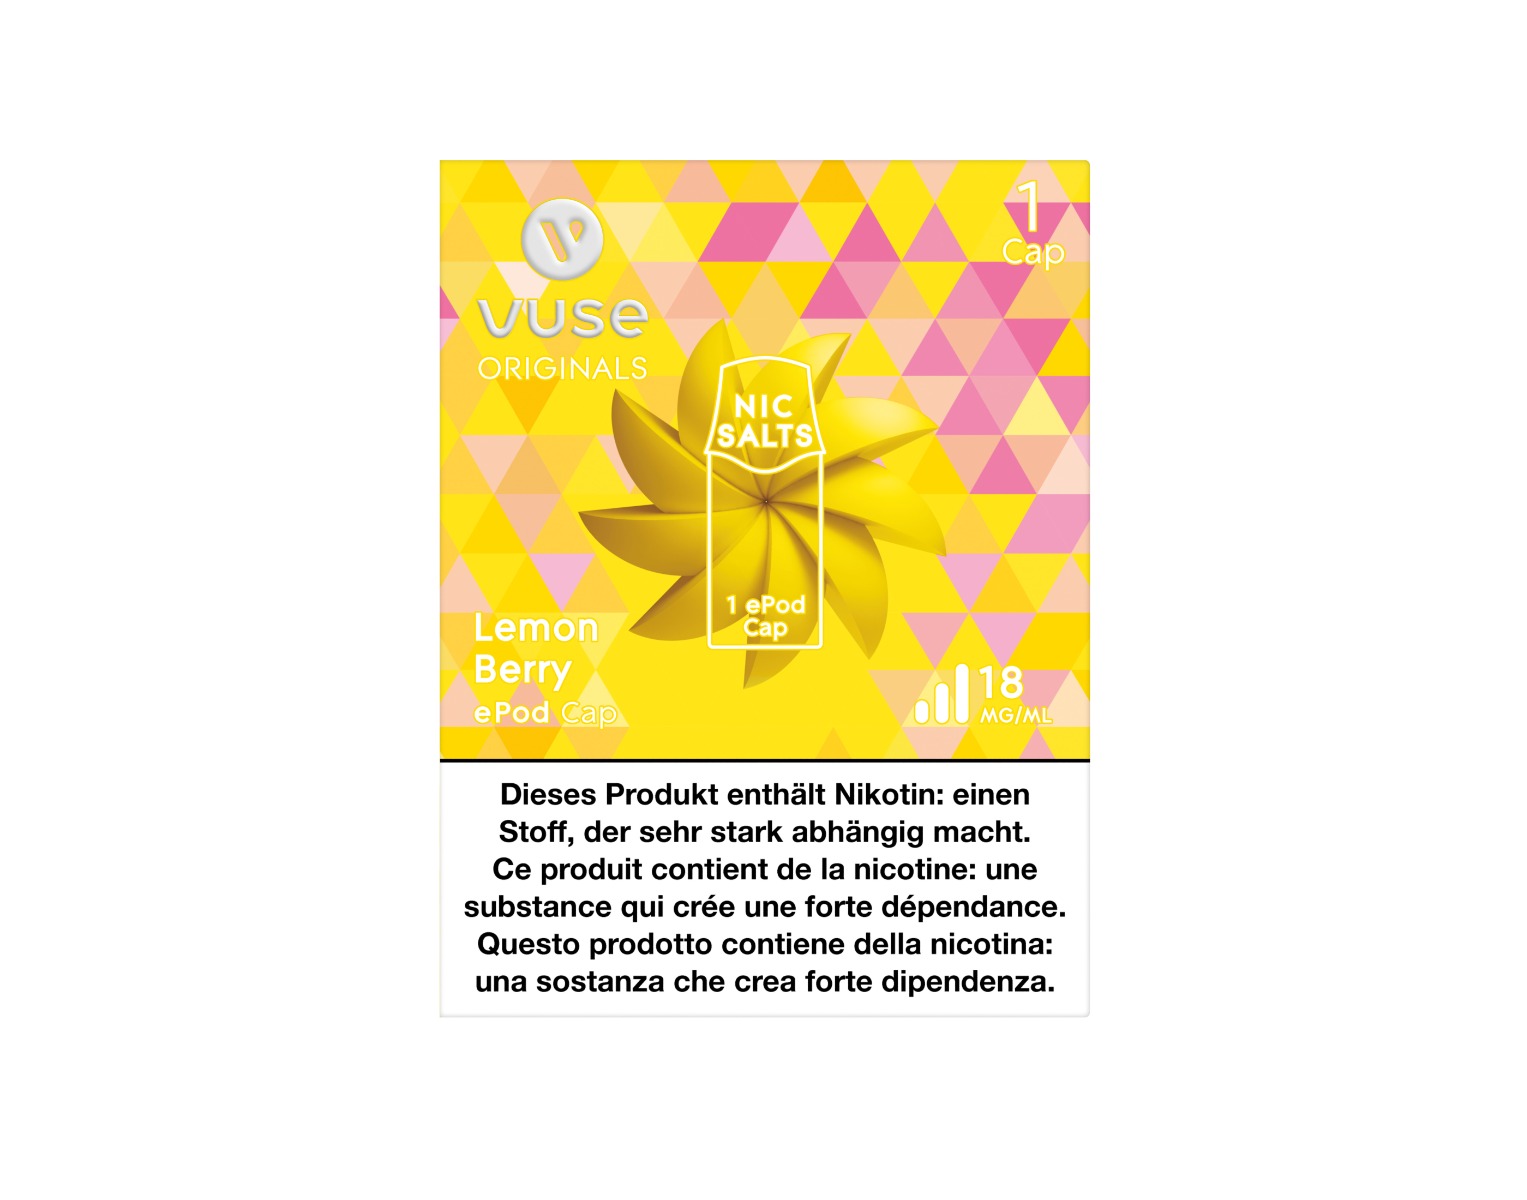 The packaging of the Lemon Berry flavour e-liquid Cap for ePod e-cigarette